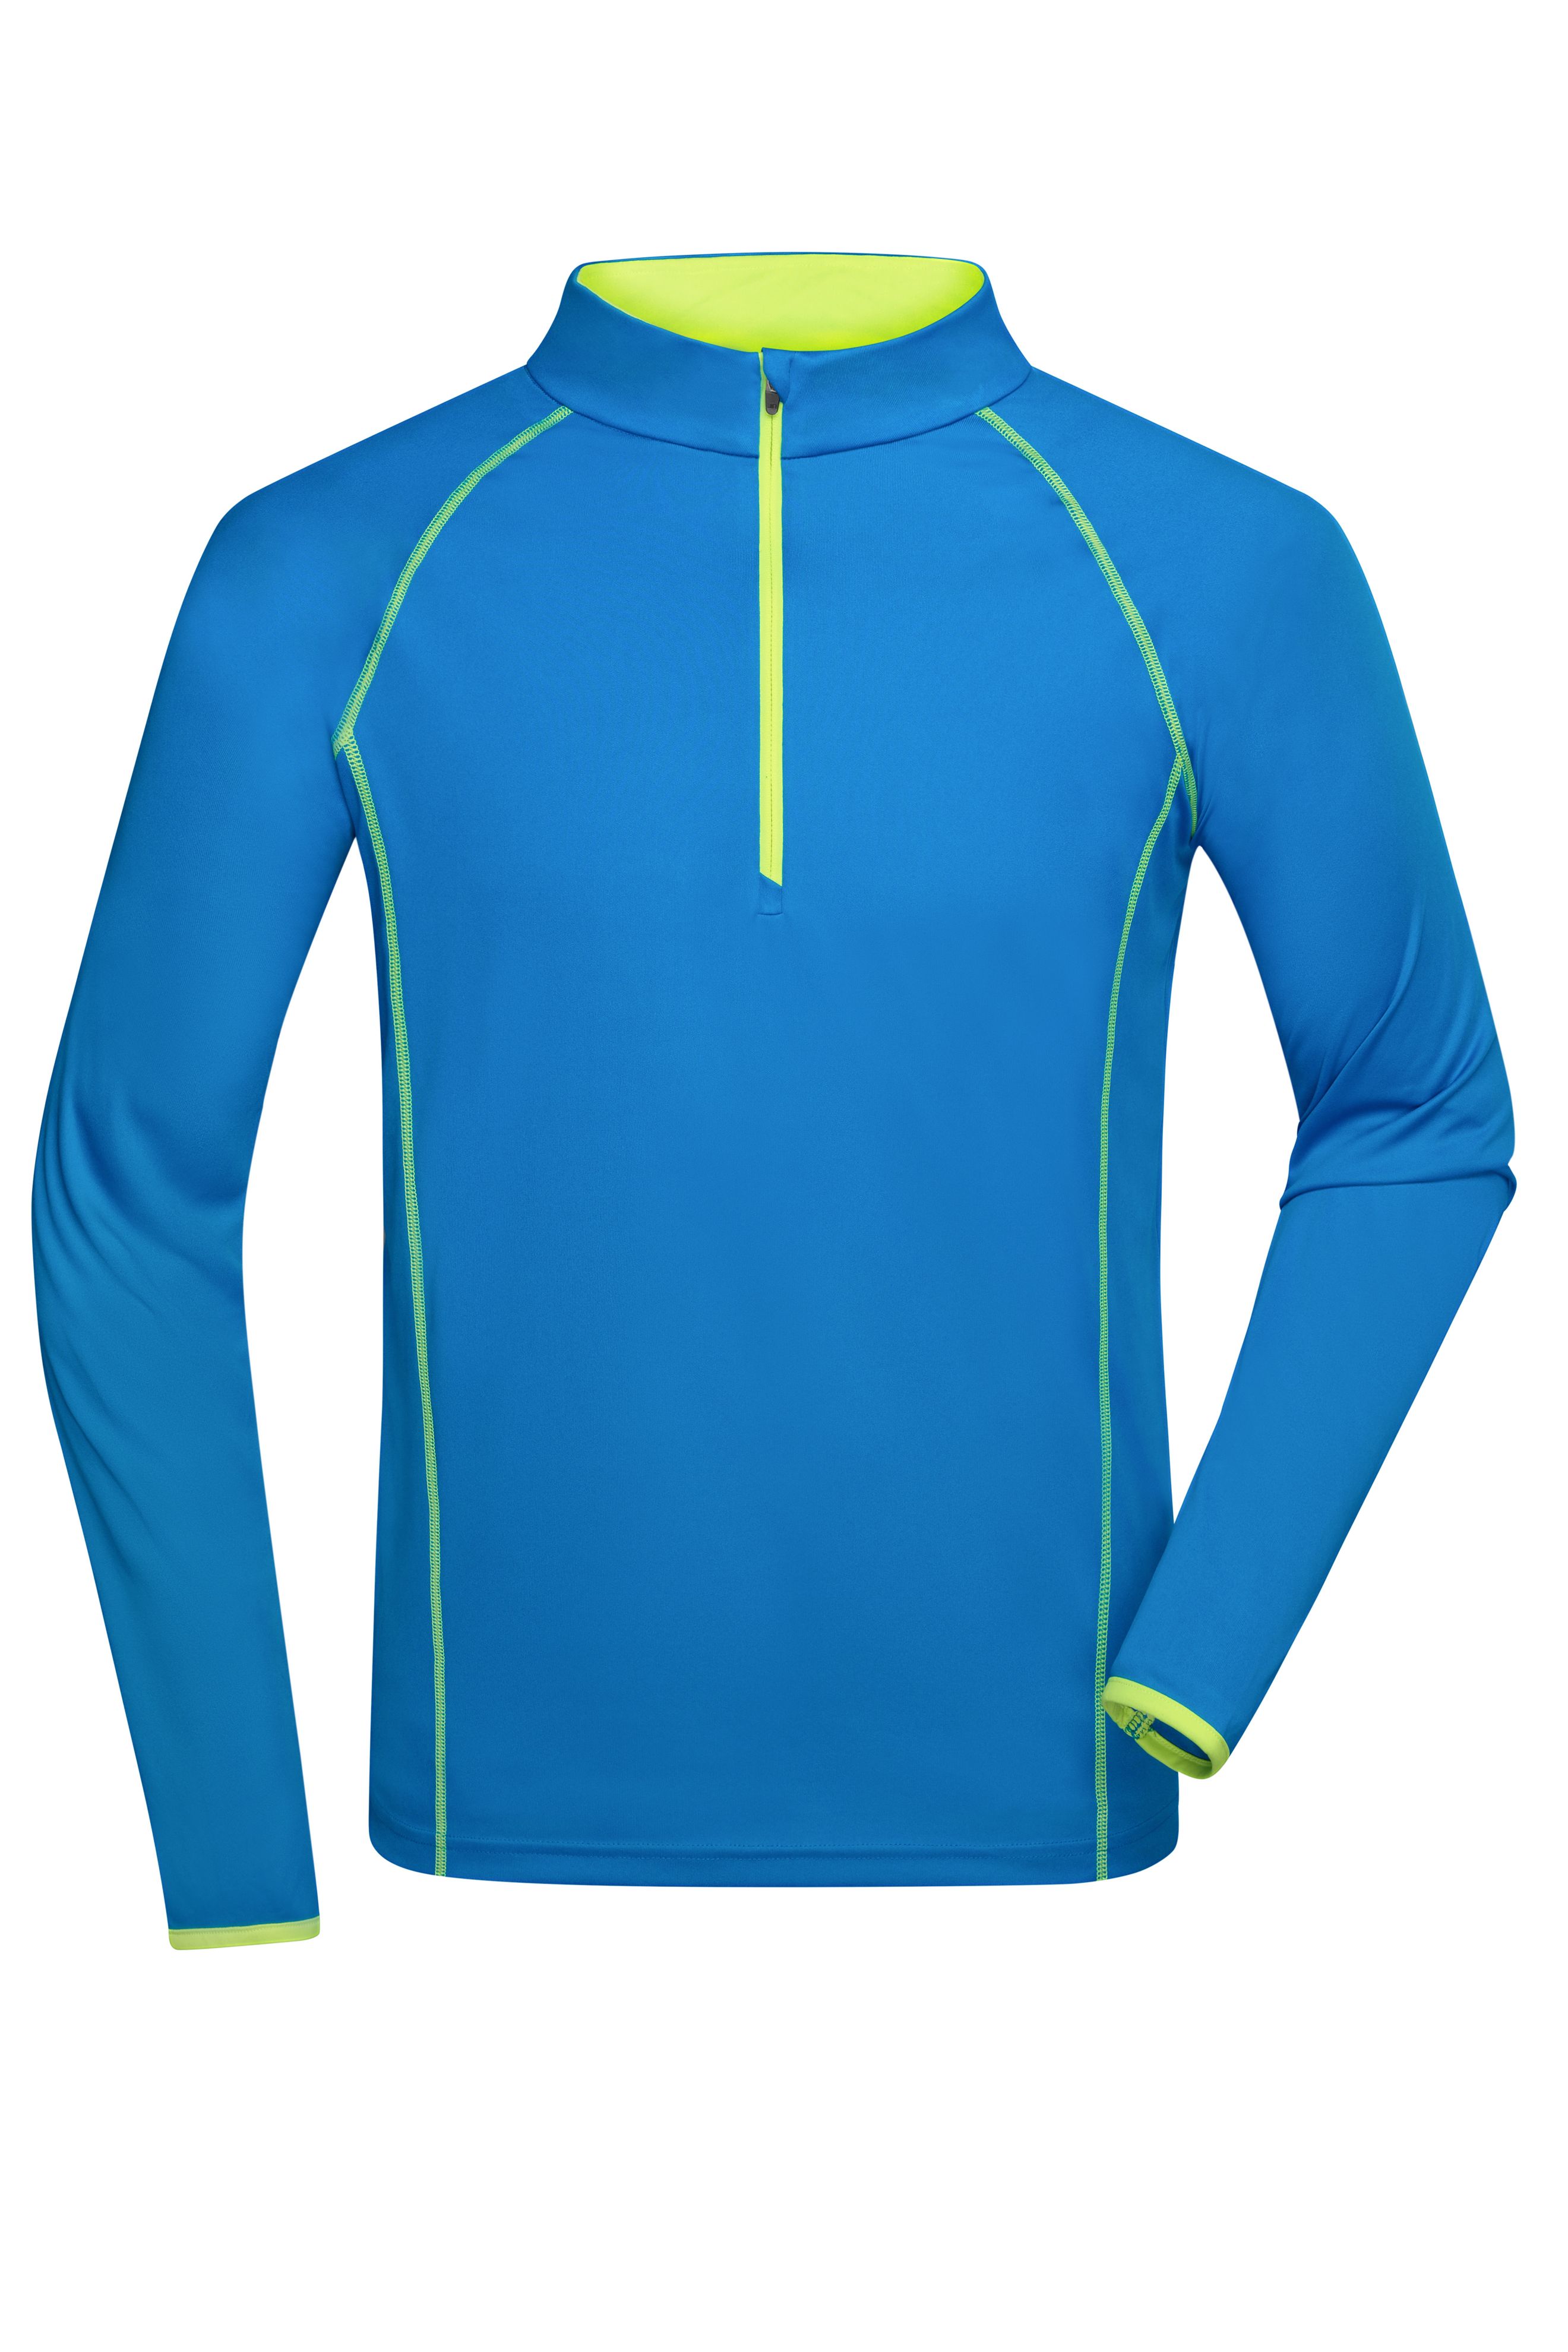 Men's Sports Shirt Longsleeve JN498 Langarm Funktionsshirt für Fitness und Sport